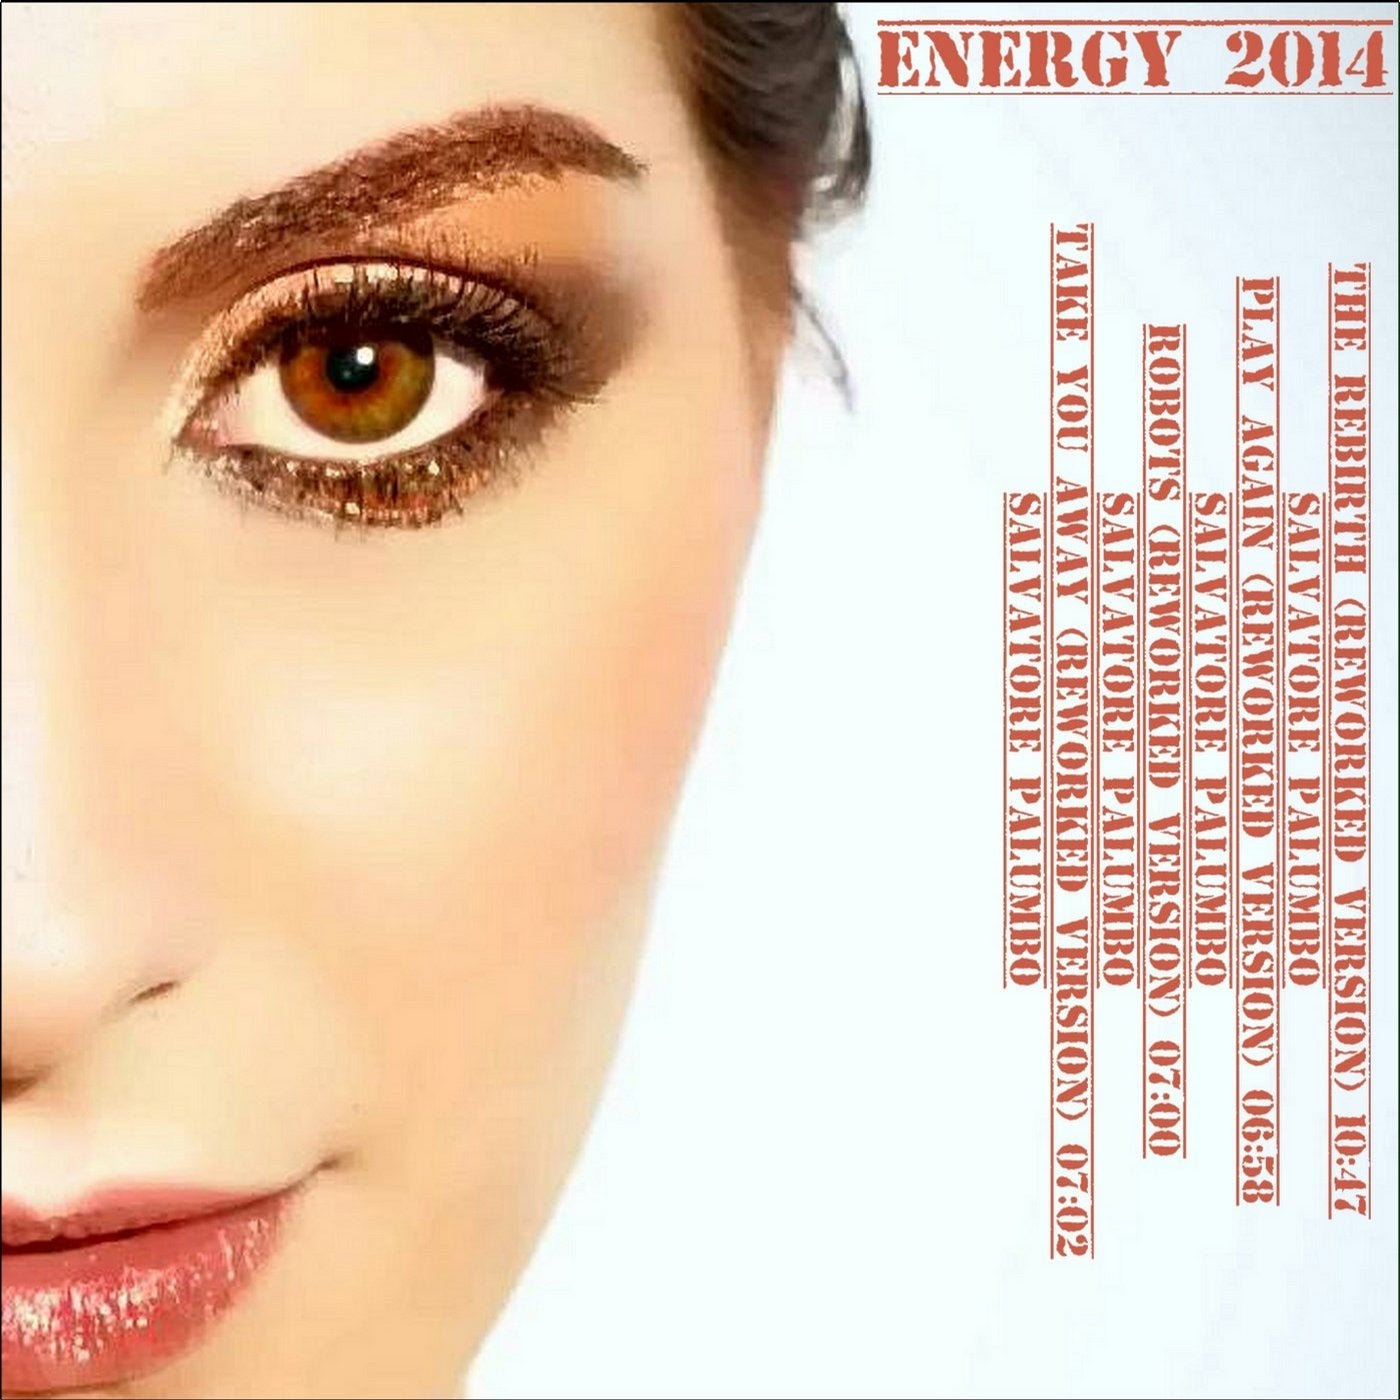 Energy 2014